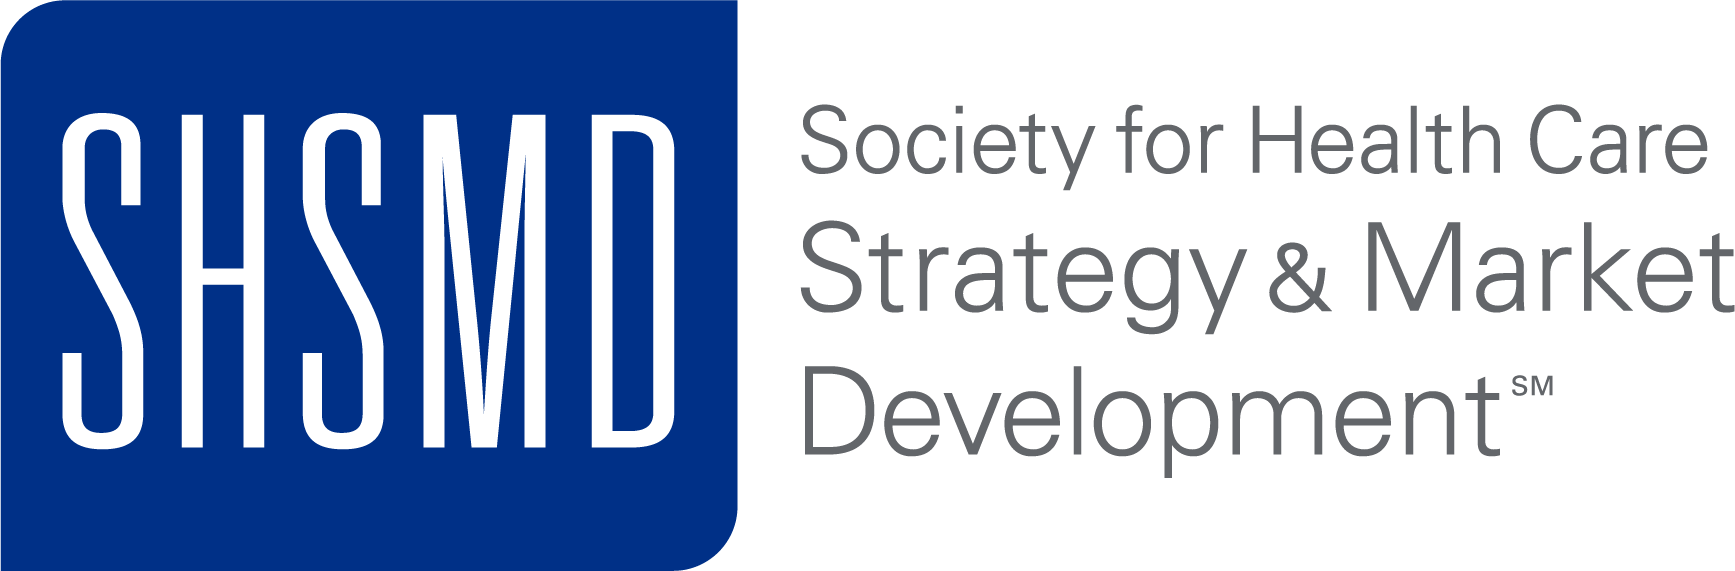 Society for Healthcare Strategy & Market Development